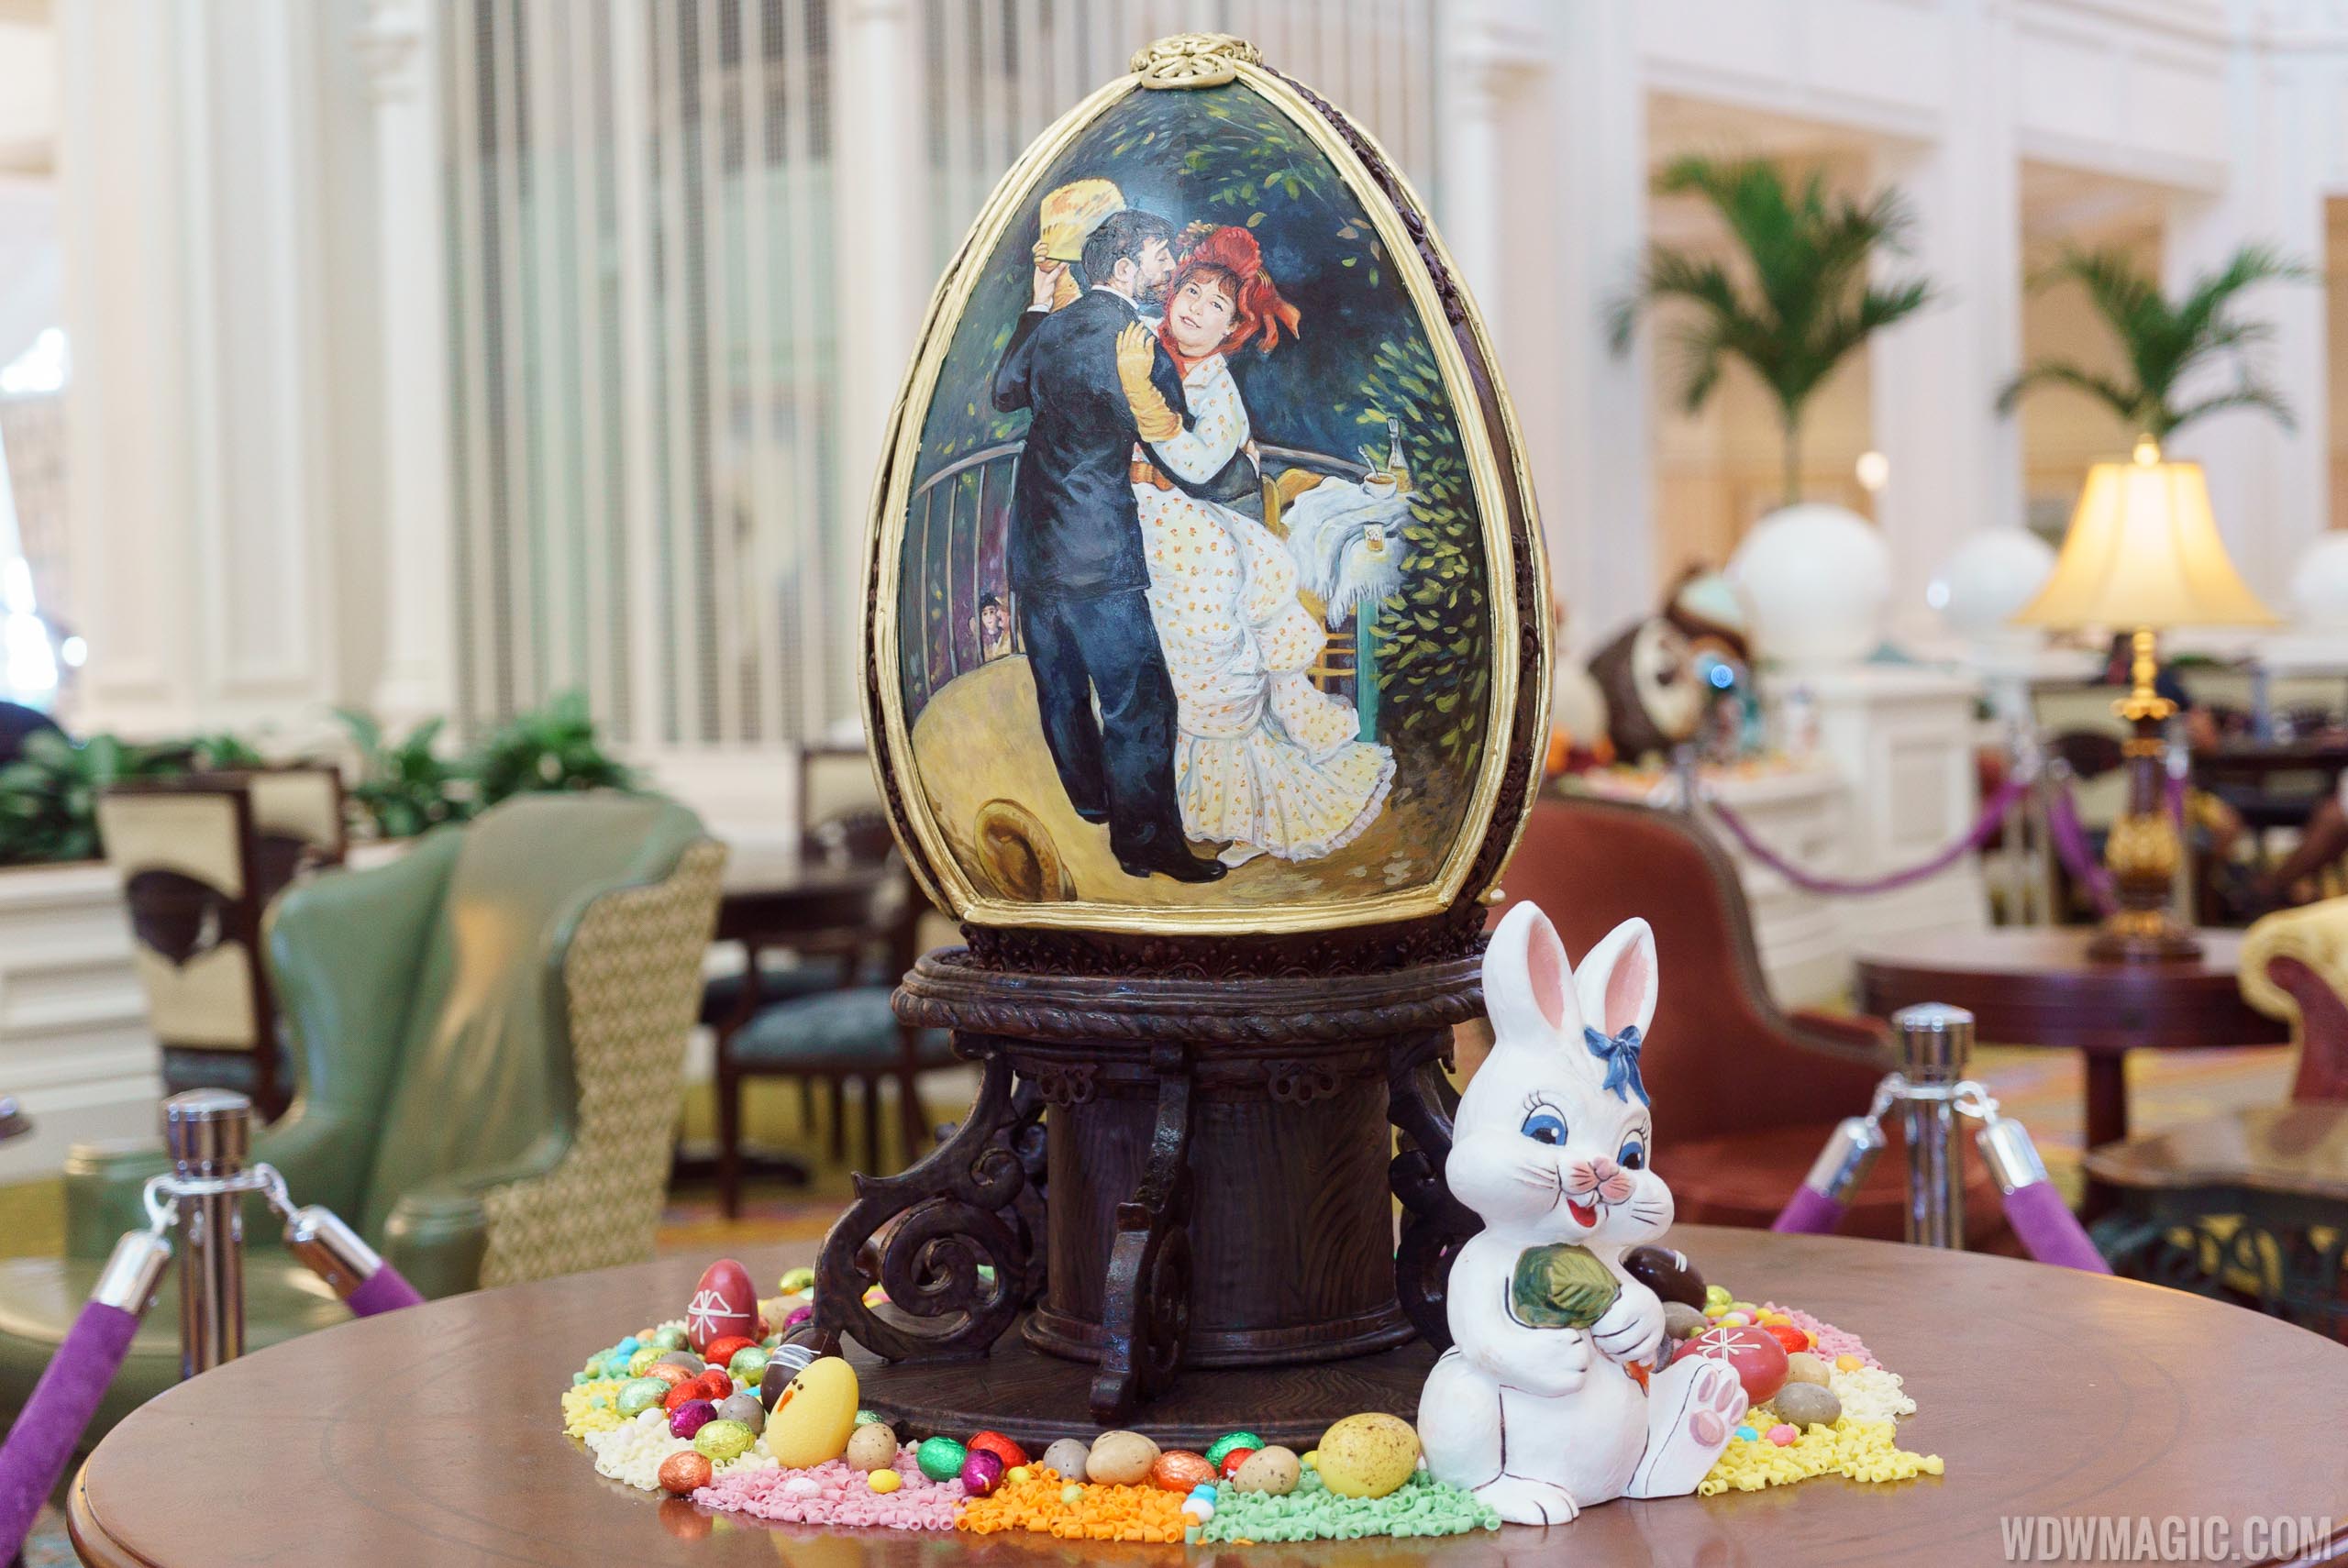 PHOTOS Easter Egg display at Disney's Grand Floridian Resort